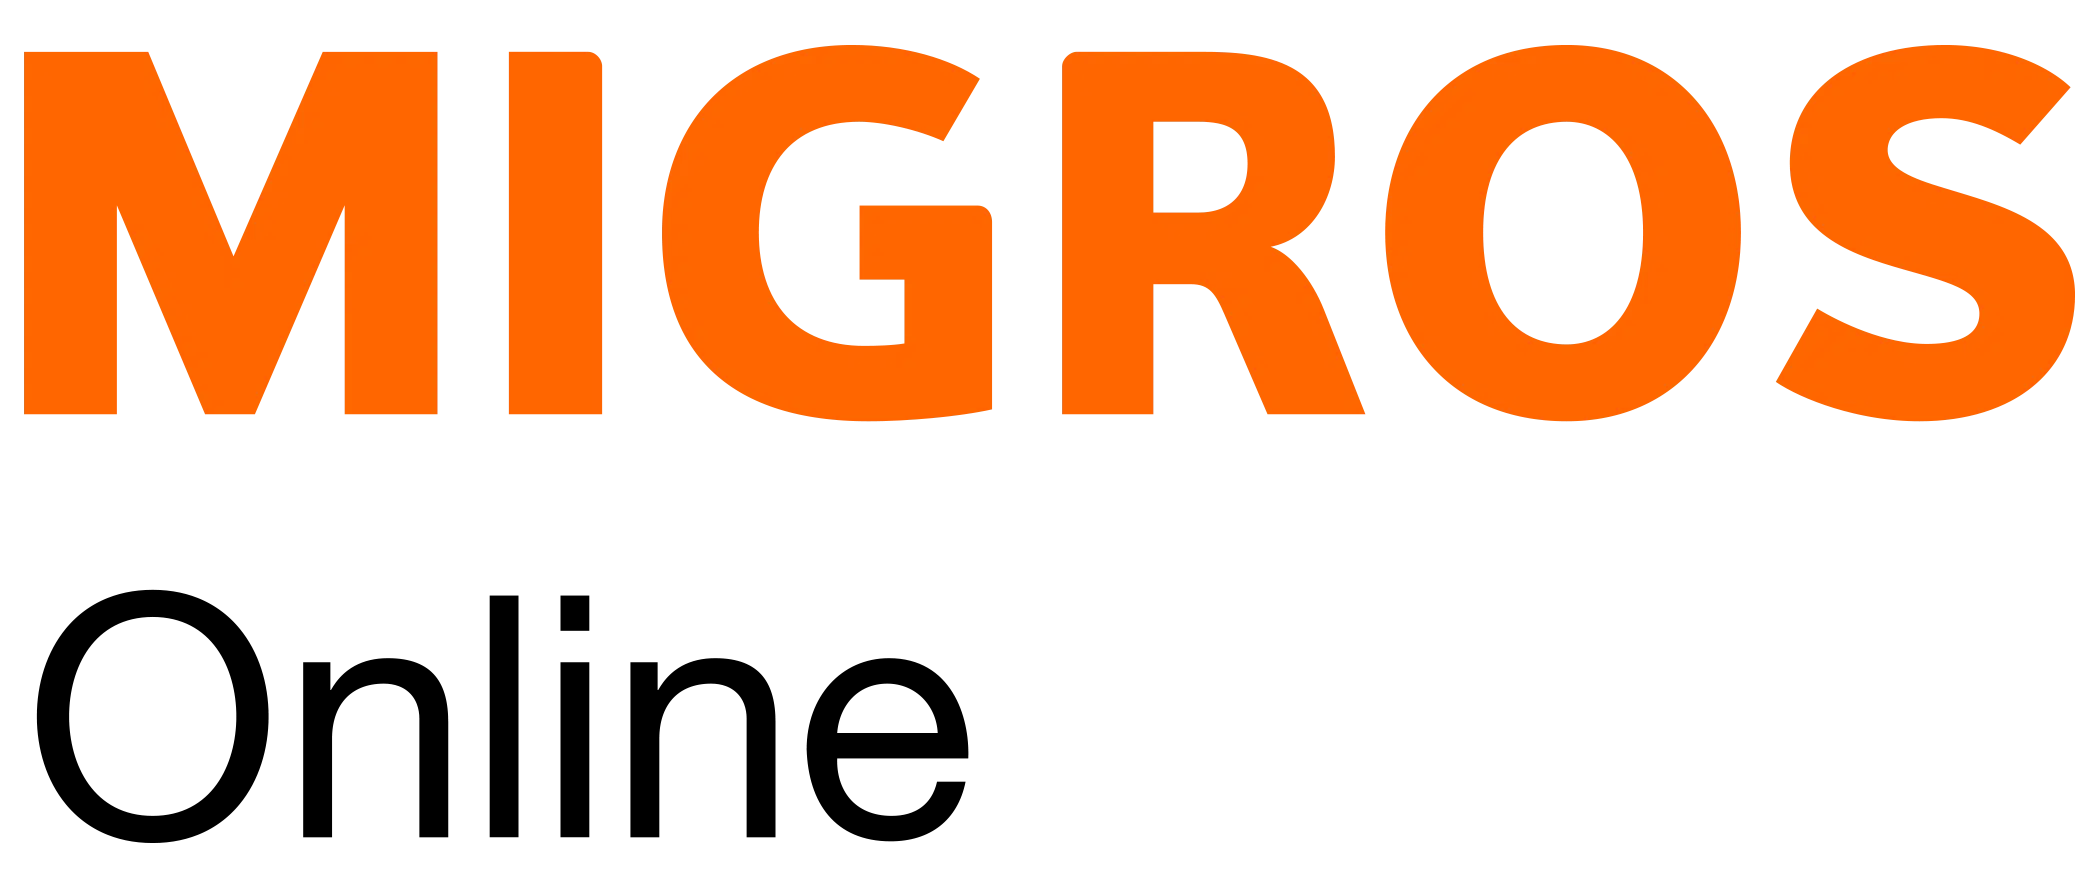 Logo Migros Online